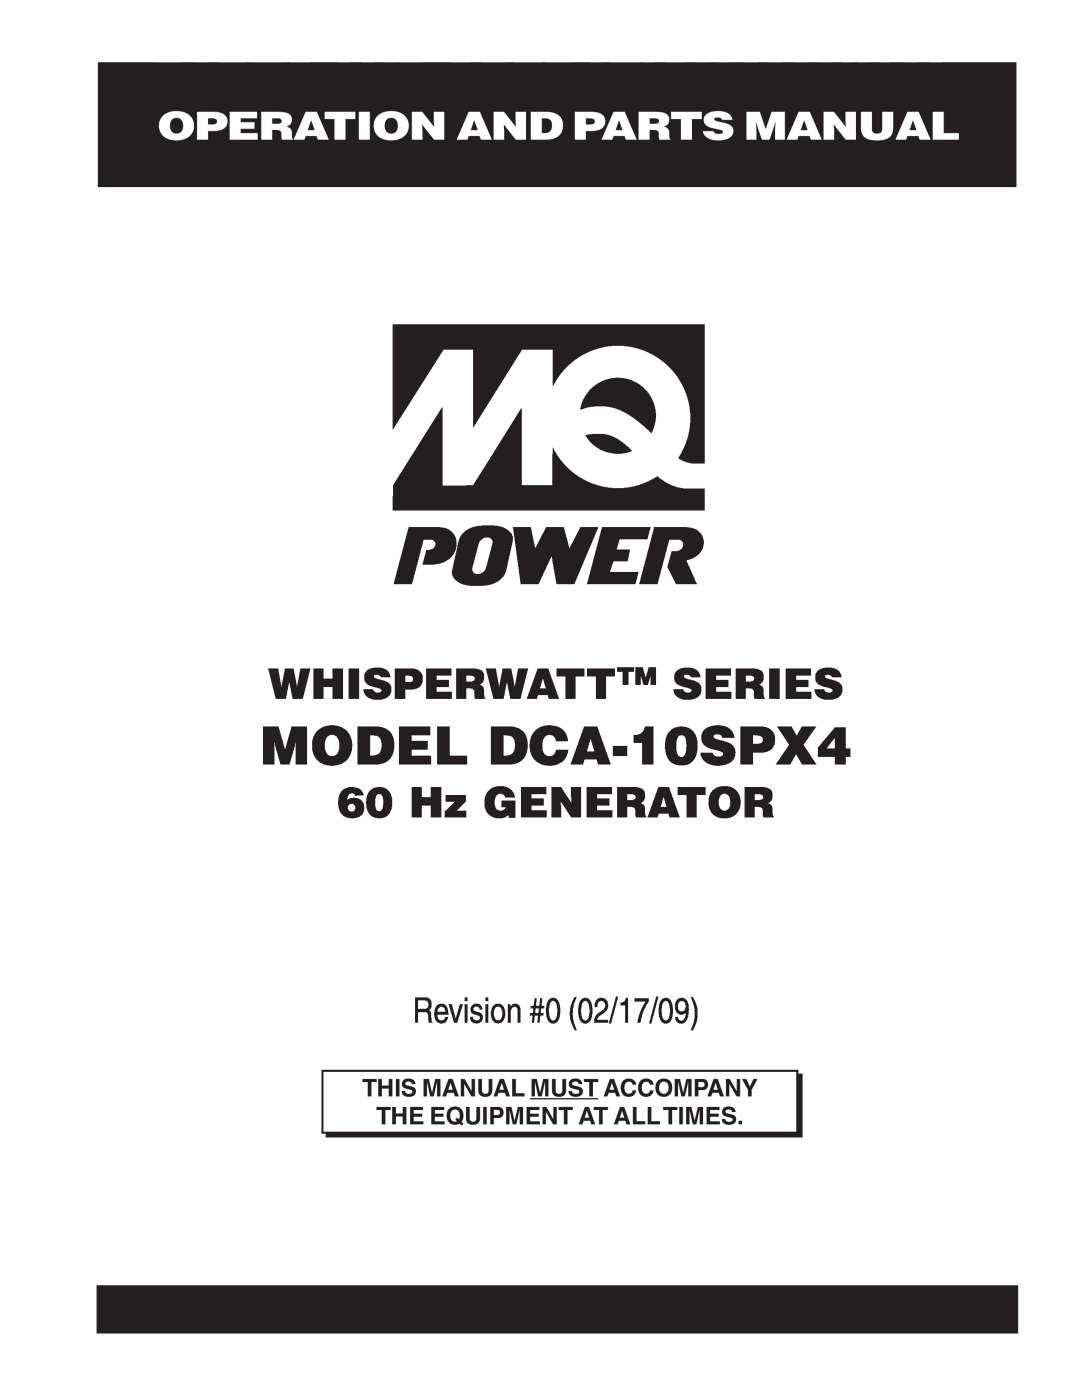 Multiquip operation manual Operation And Parts Manual, MODEL DCA-10SPX4, Whisperwatttm Series, Hz GENERATOR 